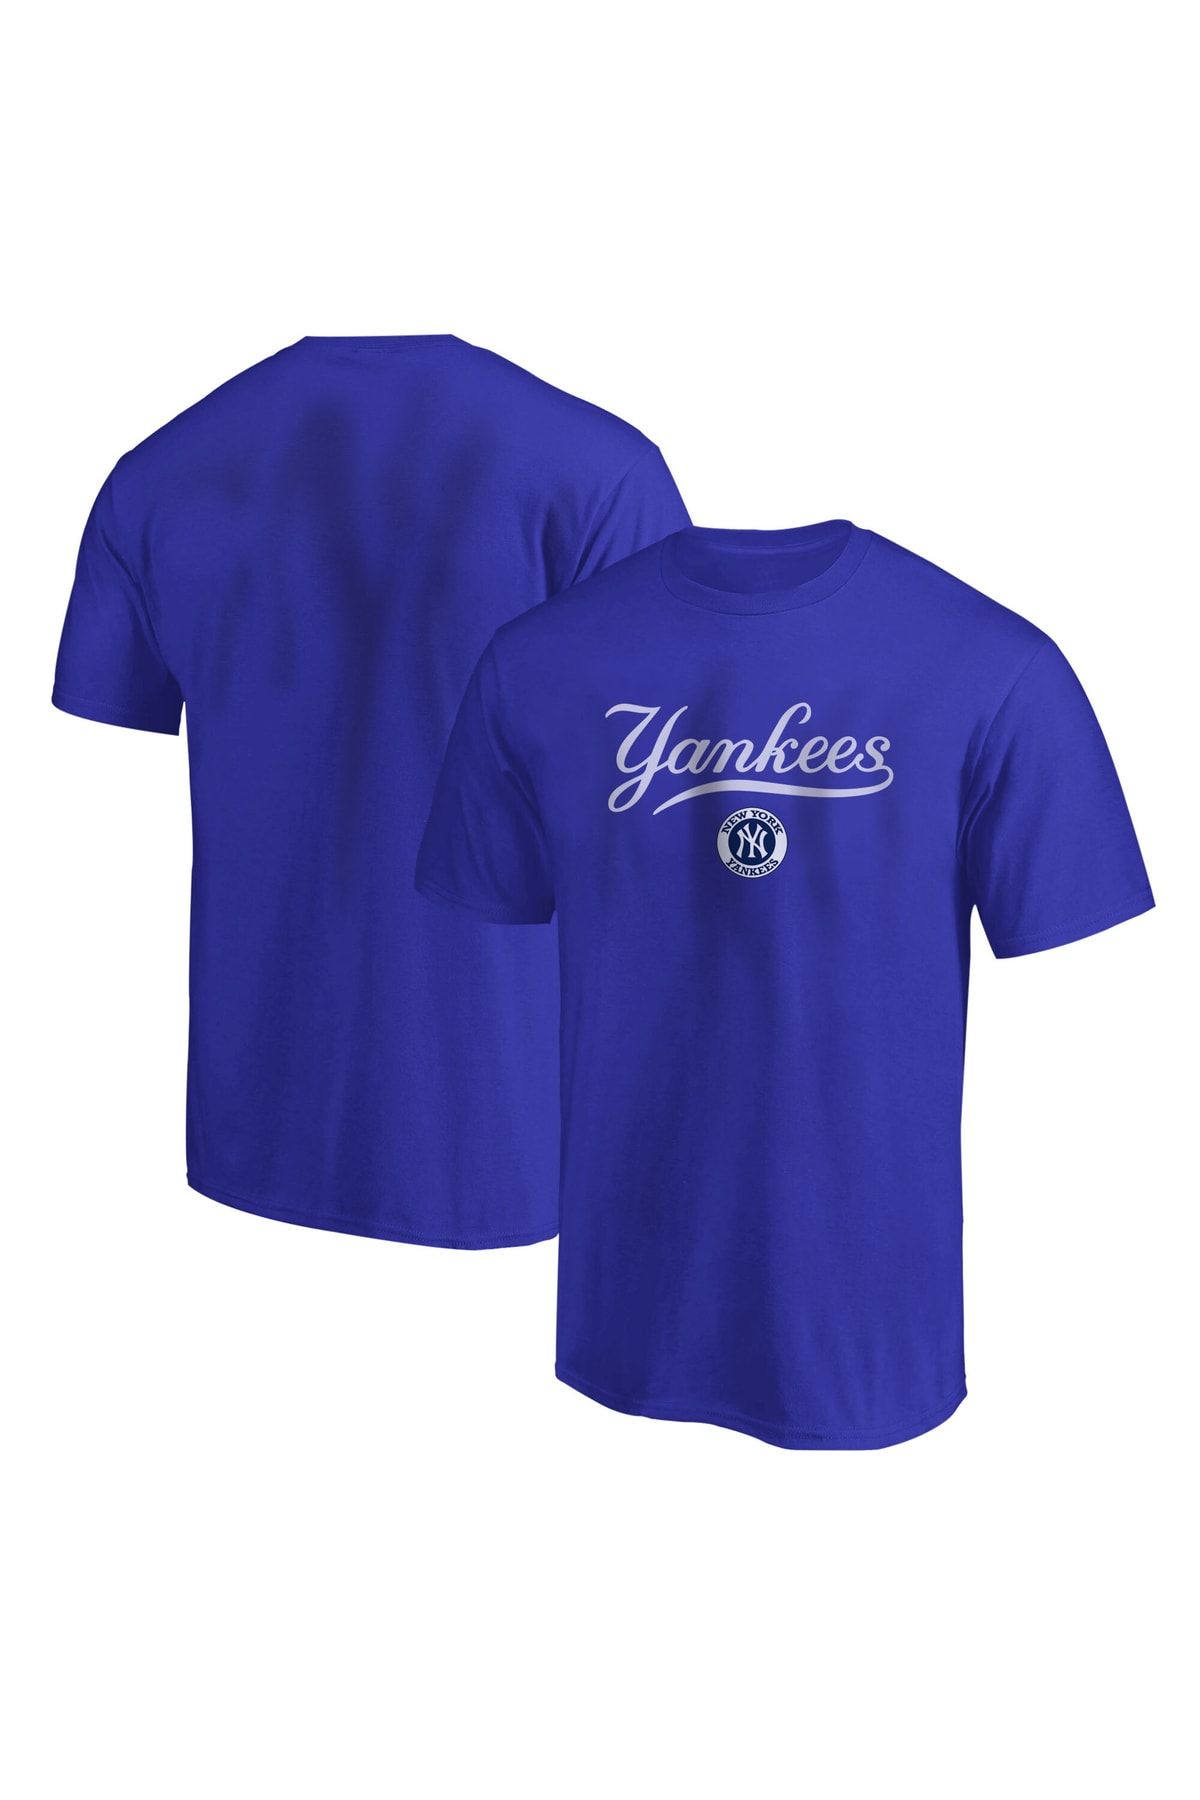 Usateamfans New York Yankees Tshirt